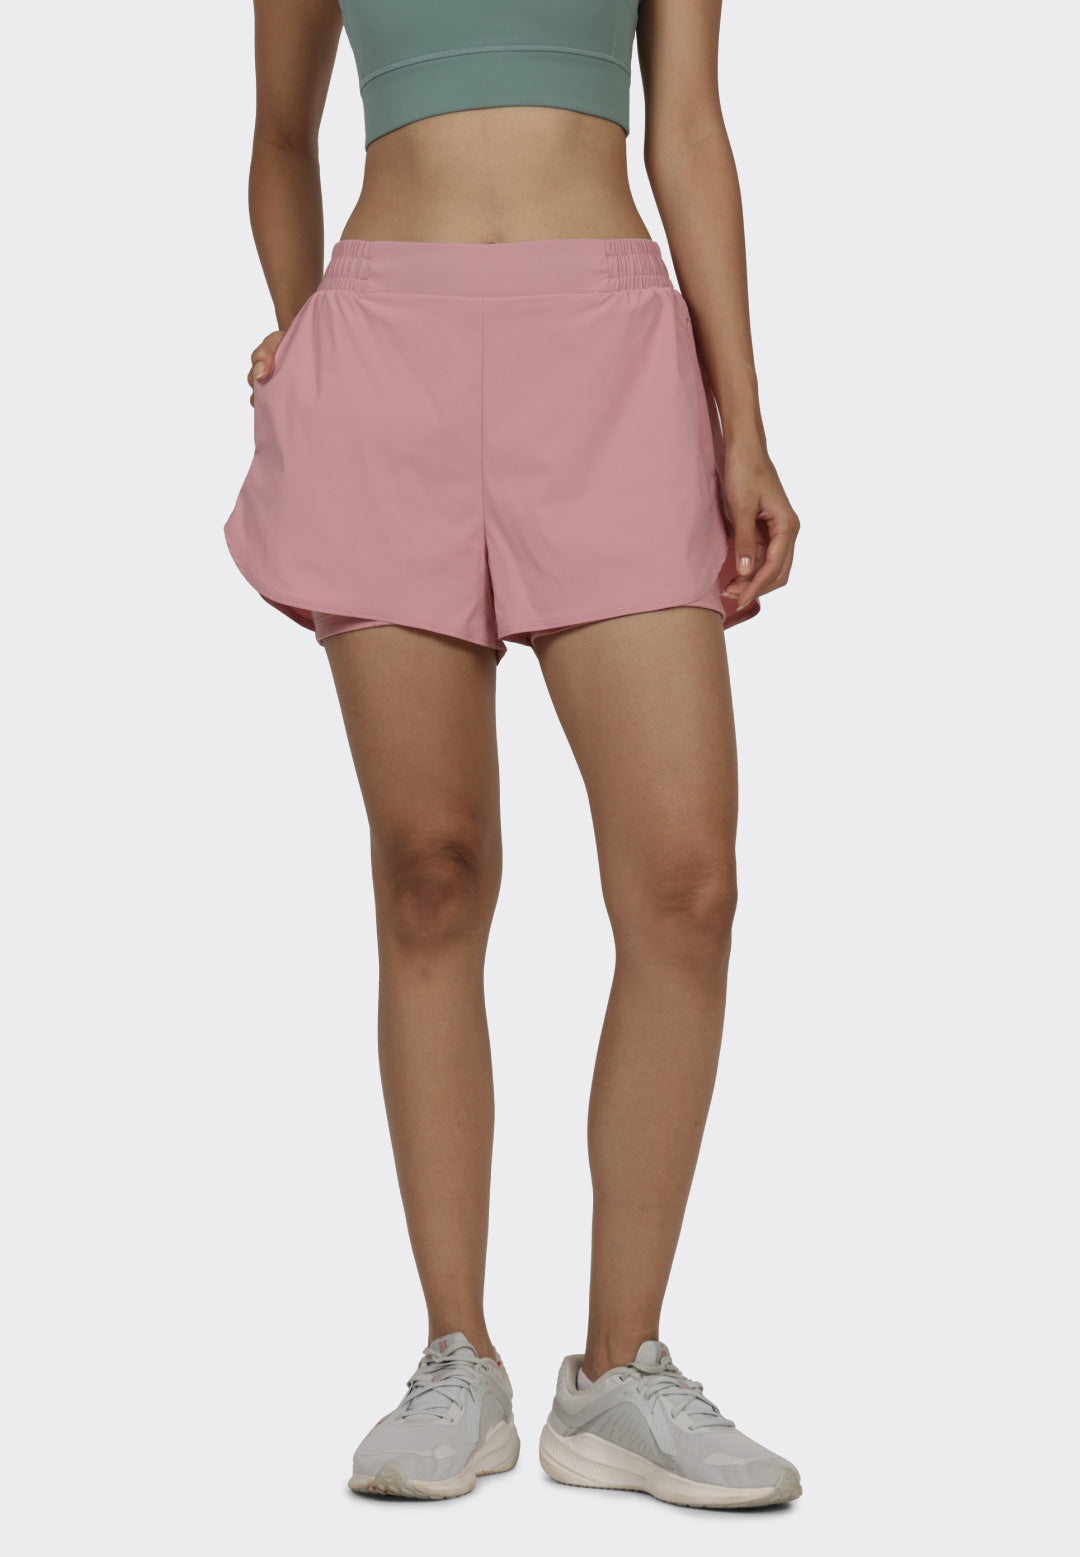 Buy Plus Size Shorts for Women Online from Blissclub